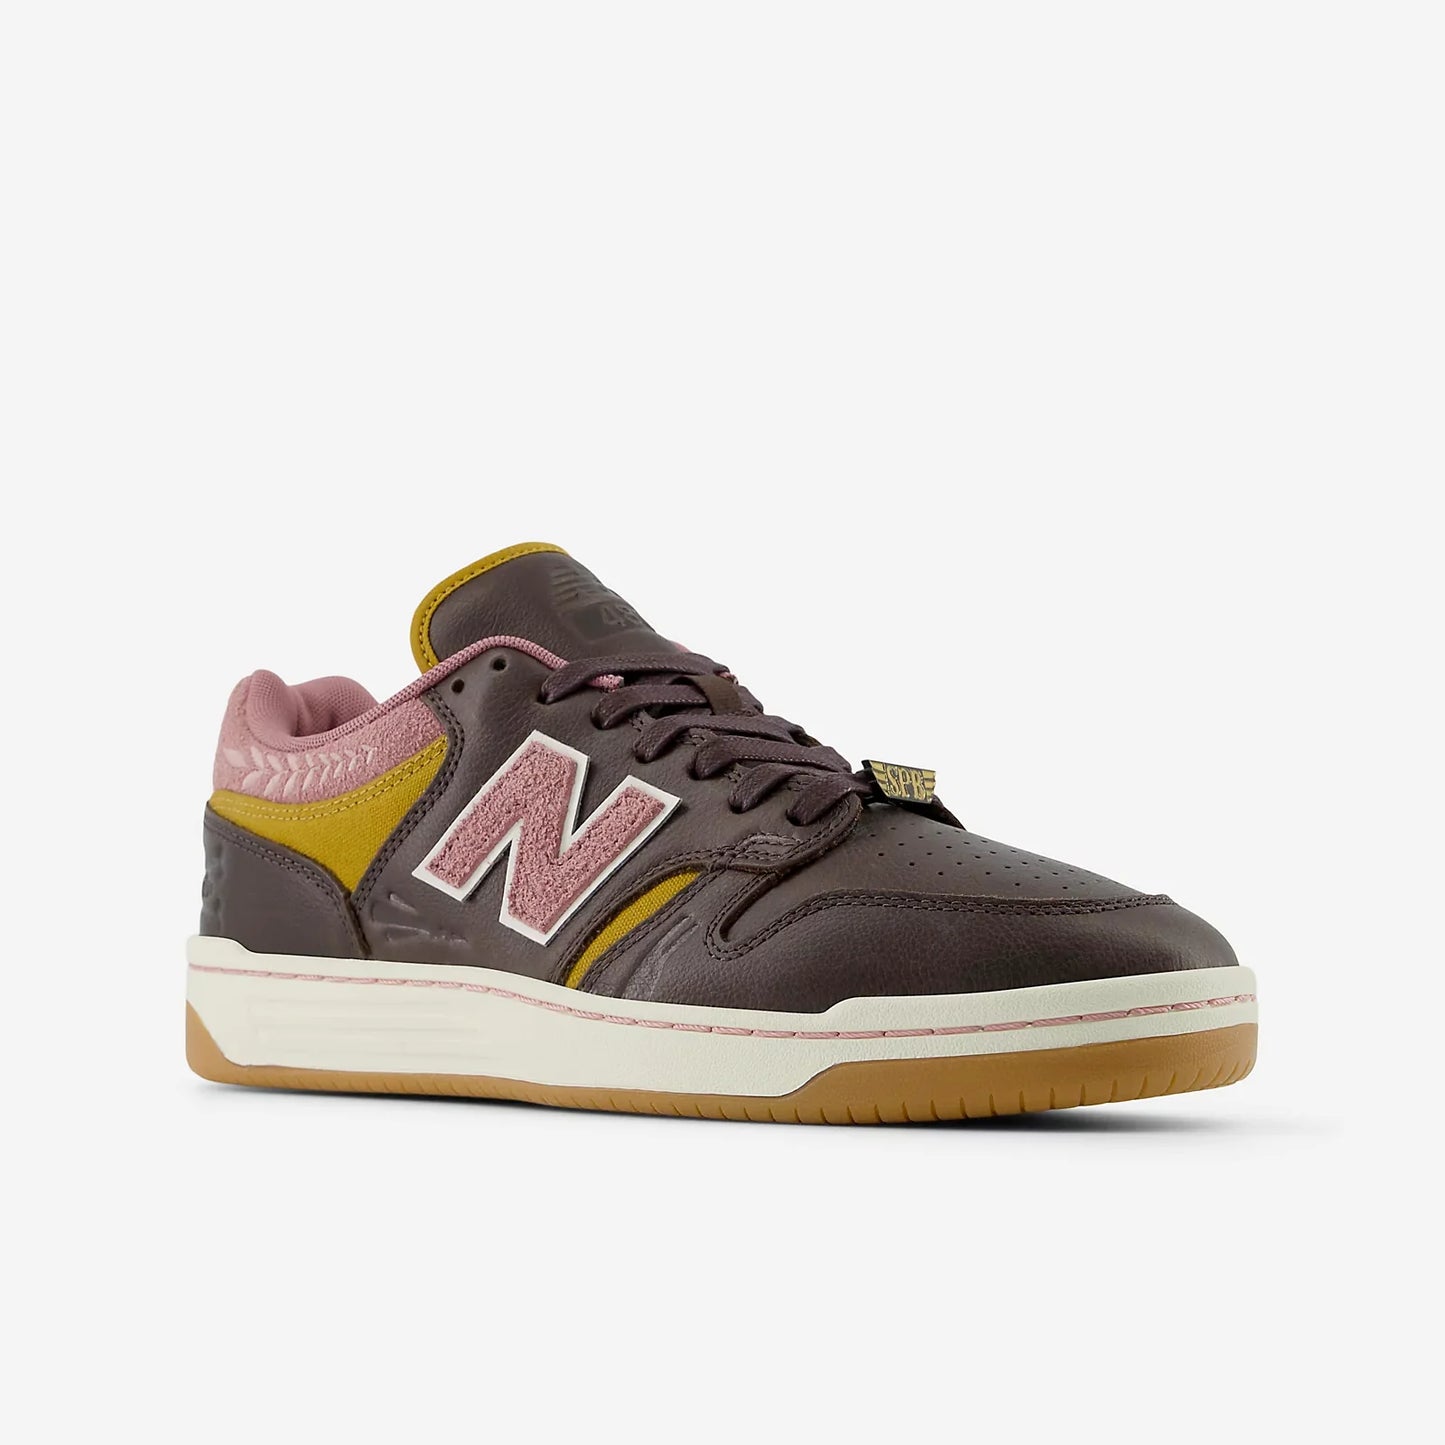 NB Numeric - NM480FXT - Brown/Pink